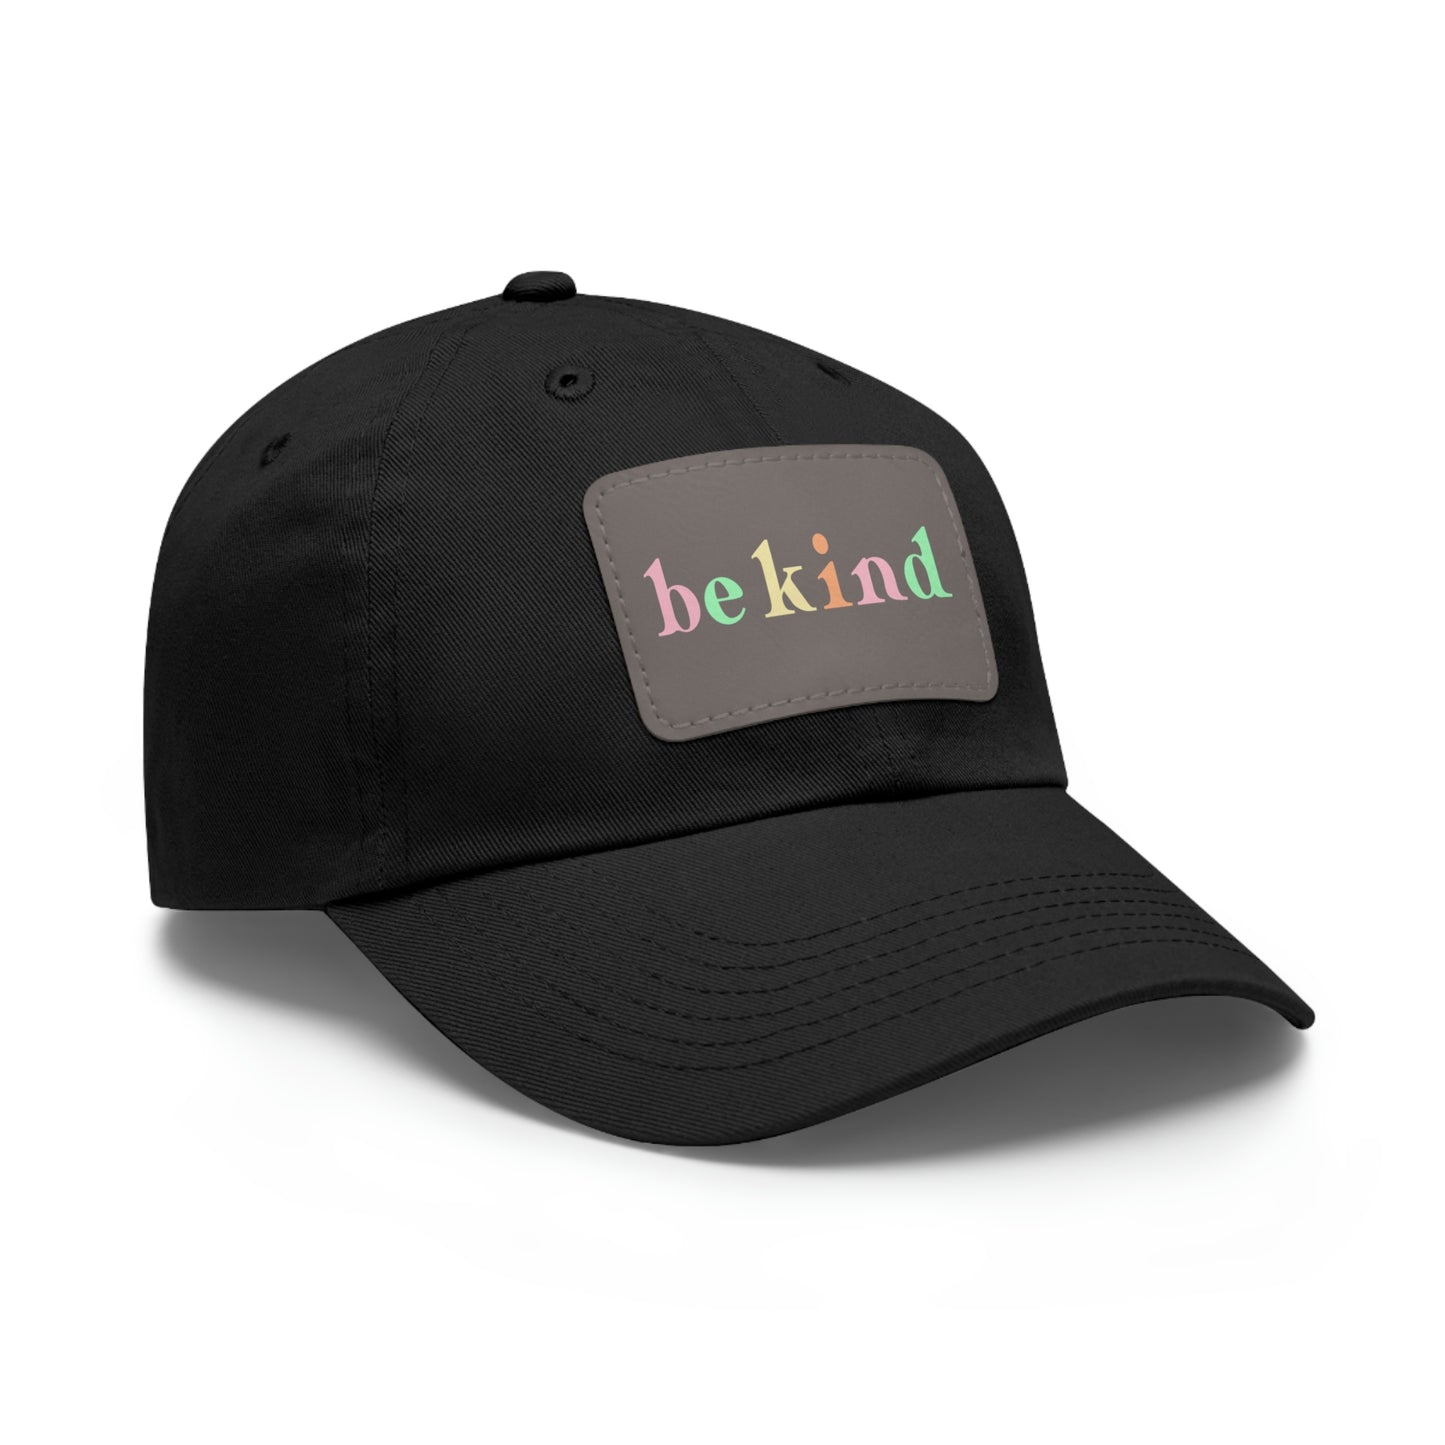 "be kind" Leather Patch Design Cap